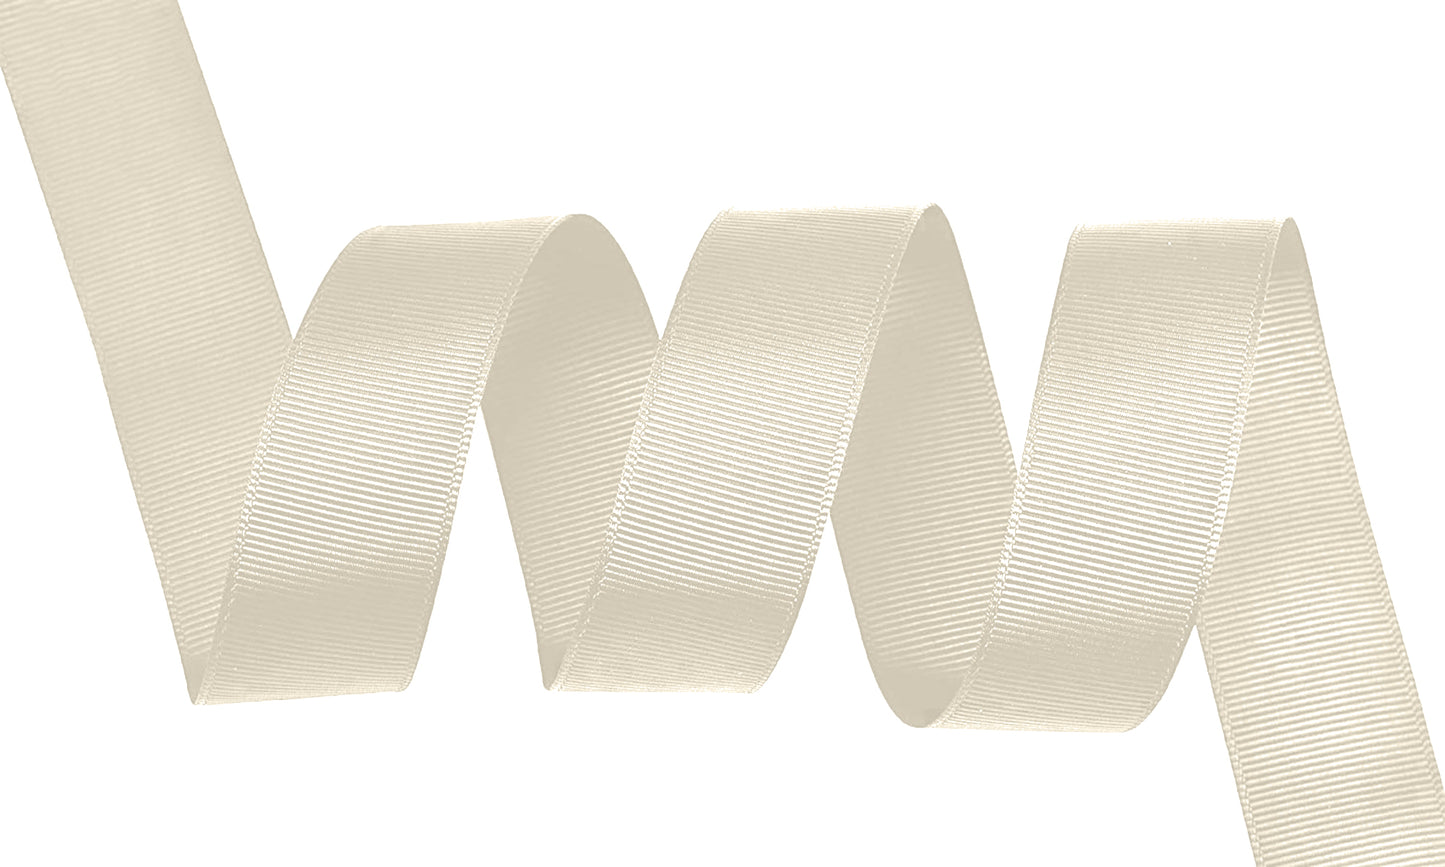 5 Yards Solid Creamy Ivory Grosgrain Ribbon Yardage DIY Crafts Bows USA